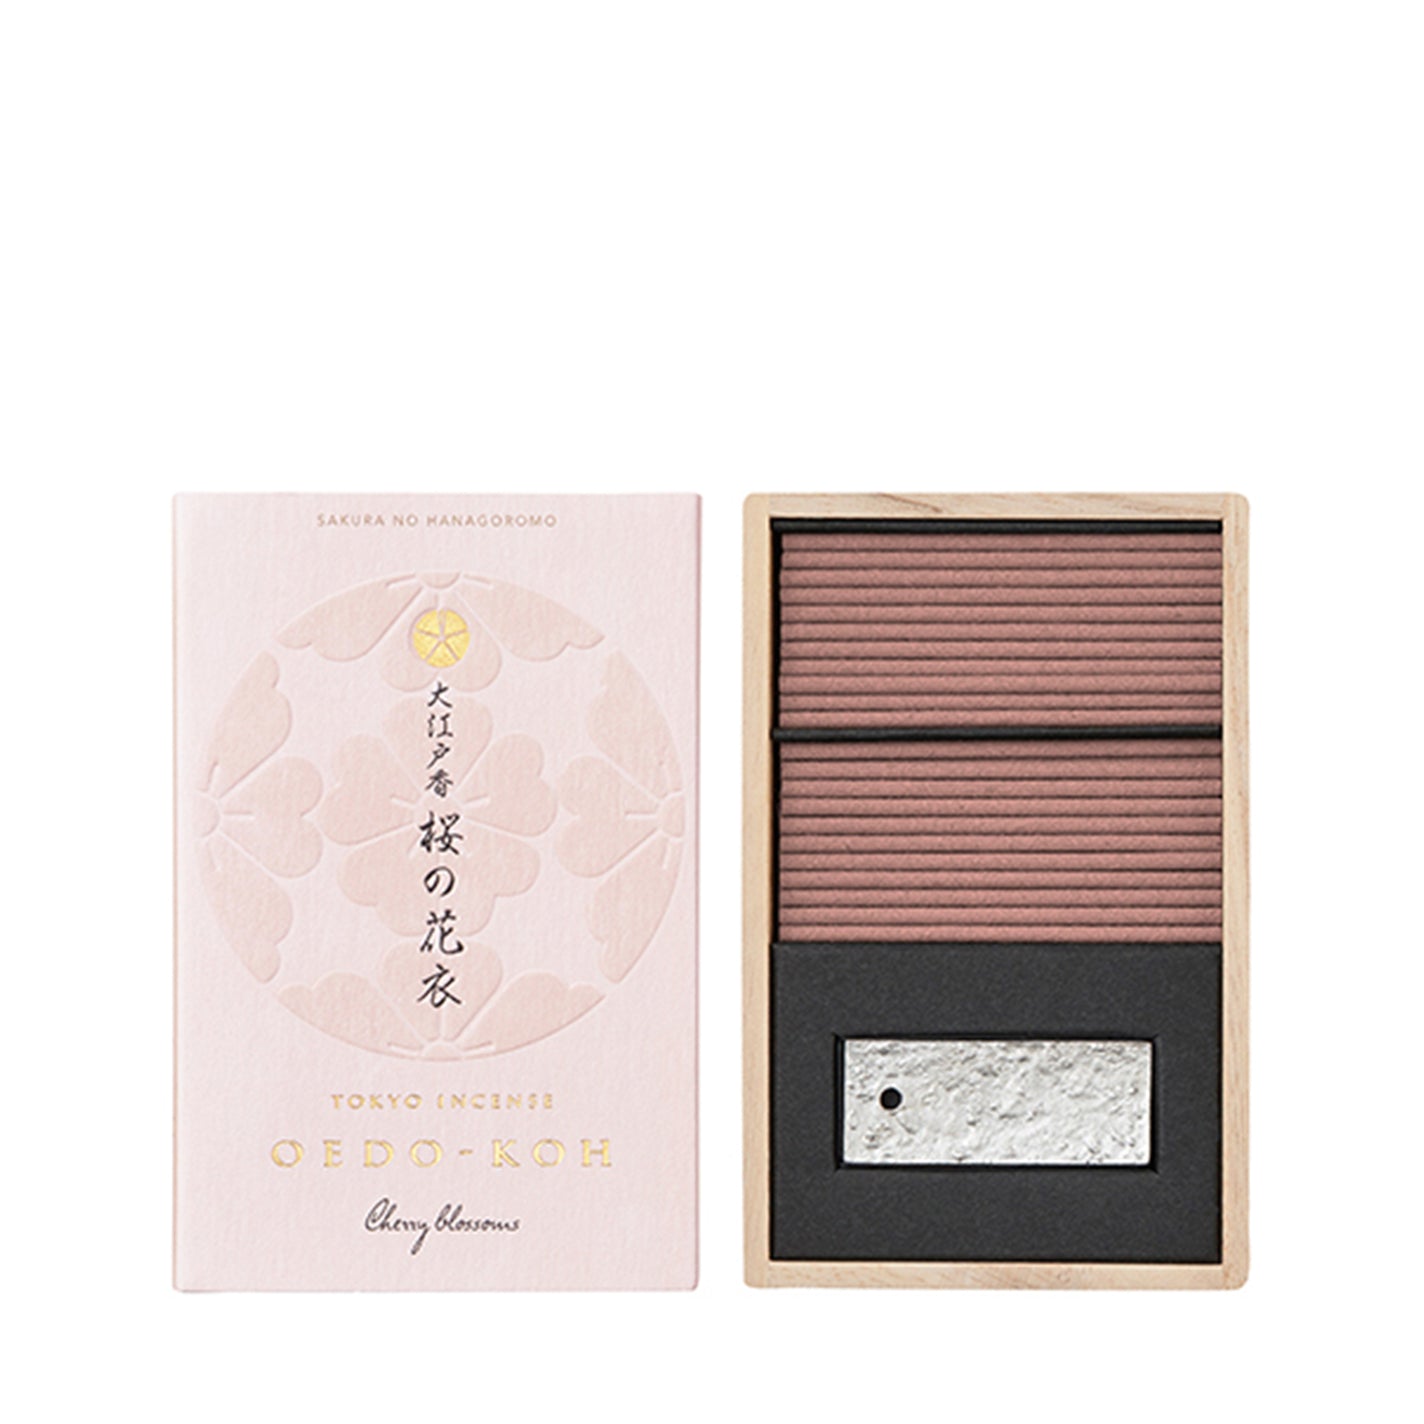 Nippon Kodo Oedo-Koh Incense - Cherry Blossoms